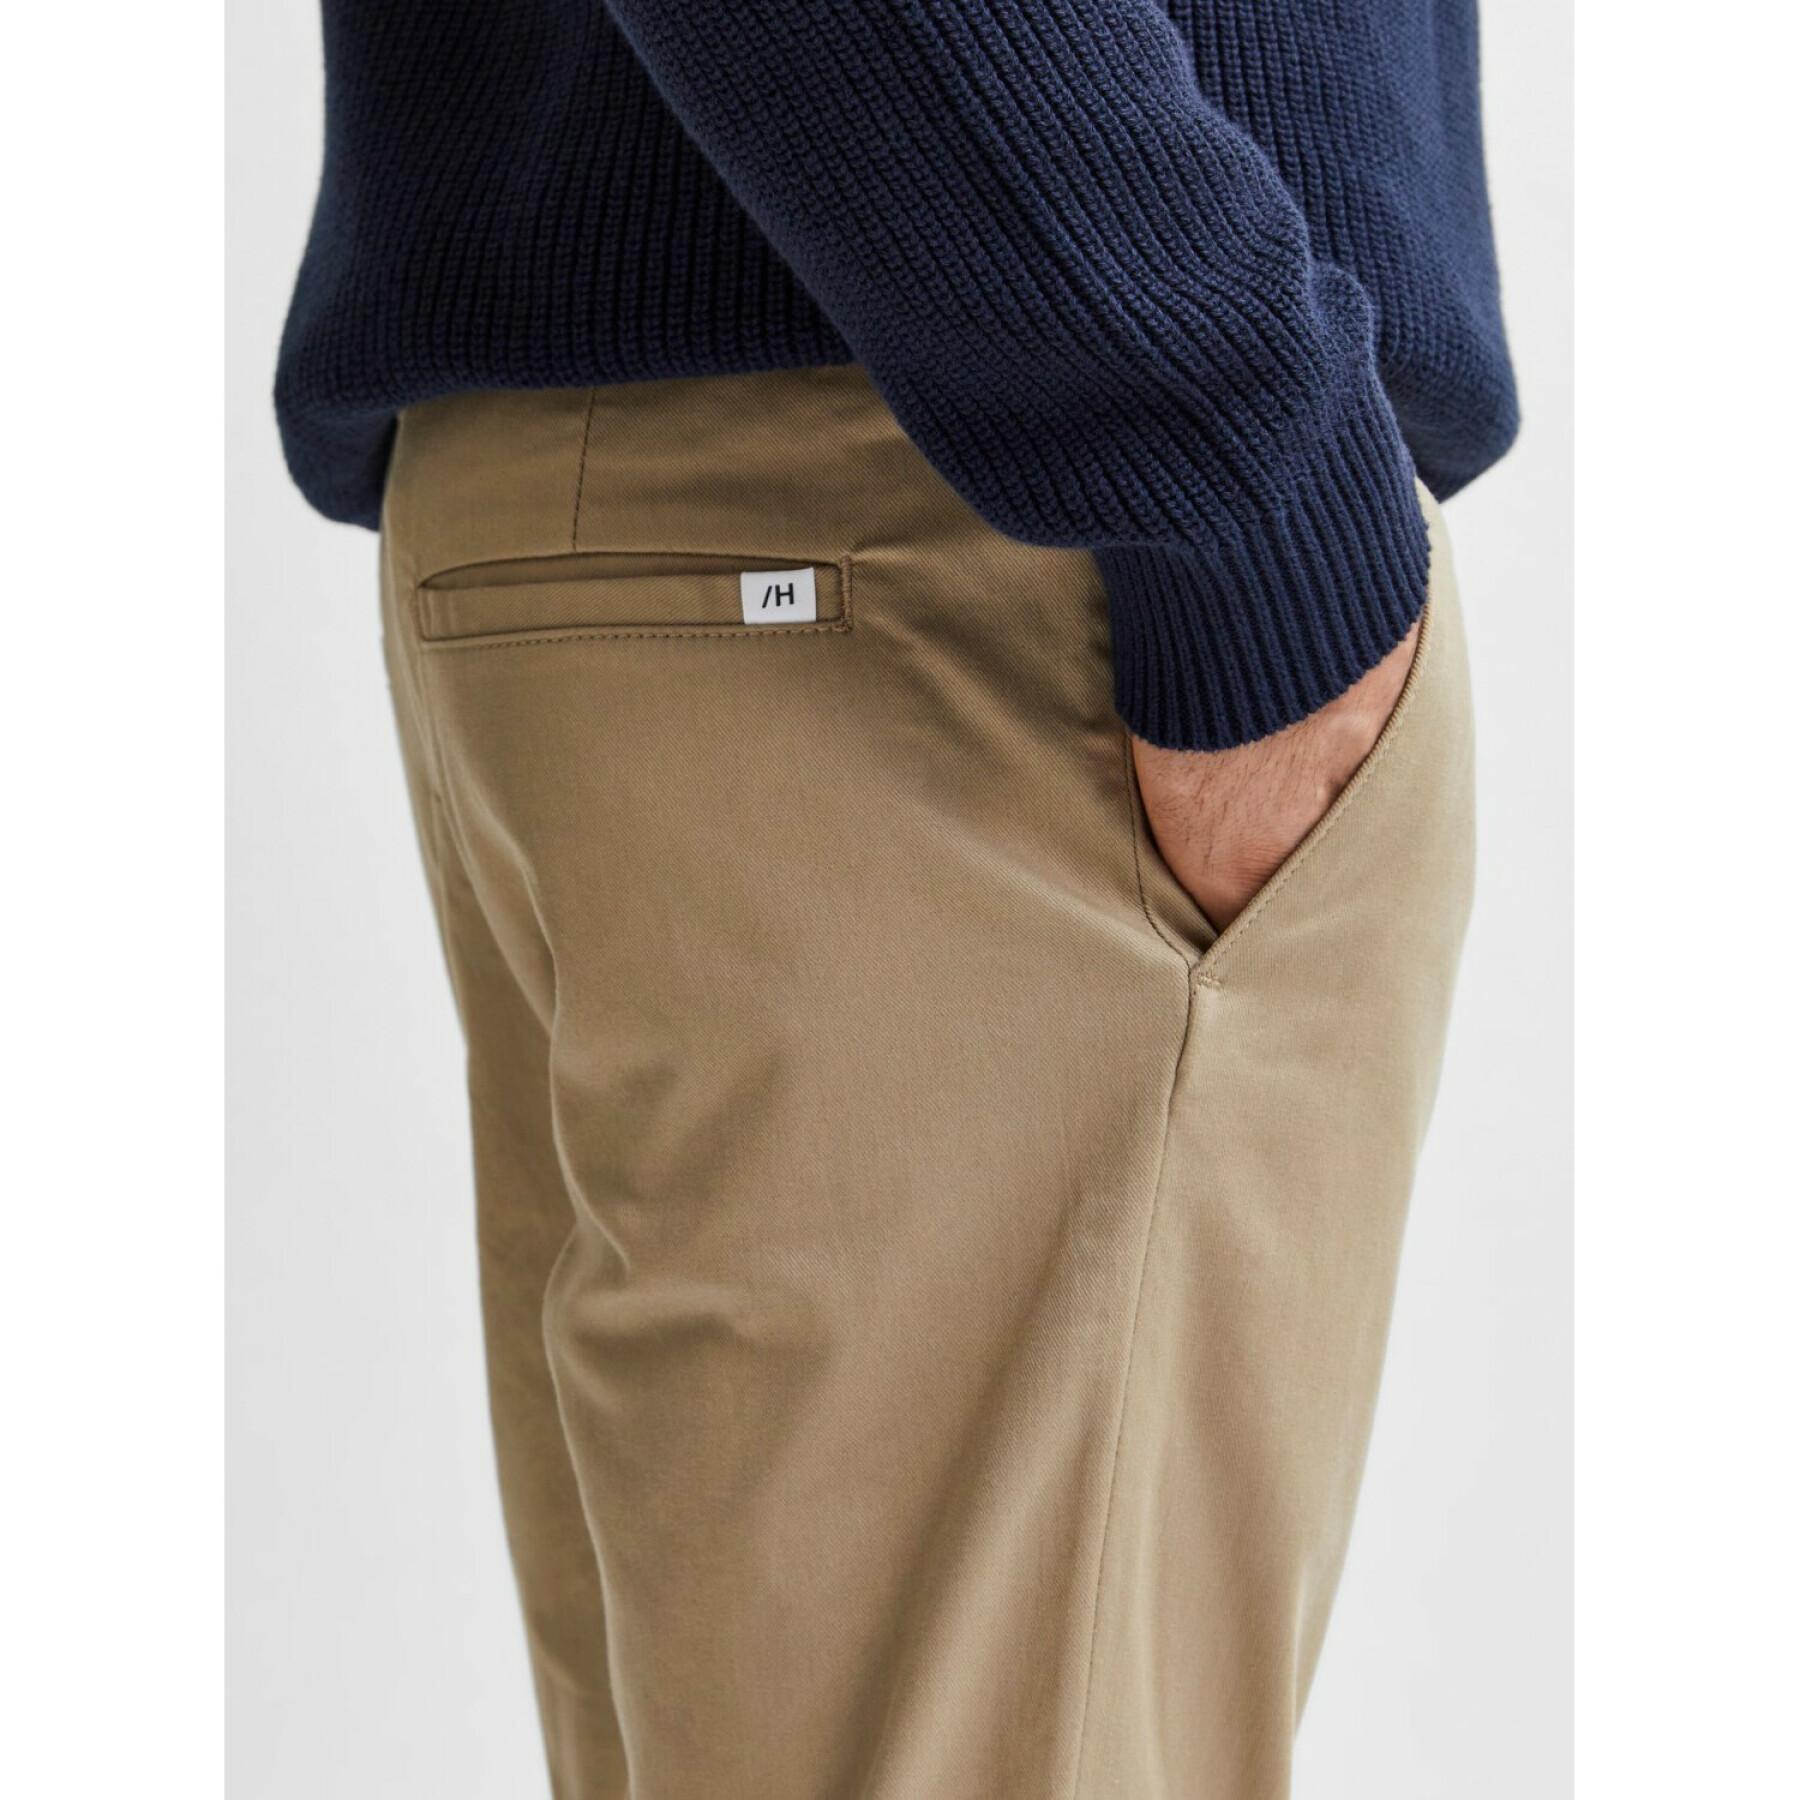 Pantalones slim-fit Selected buckley 175 flex